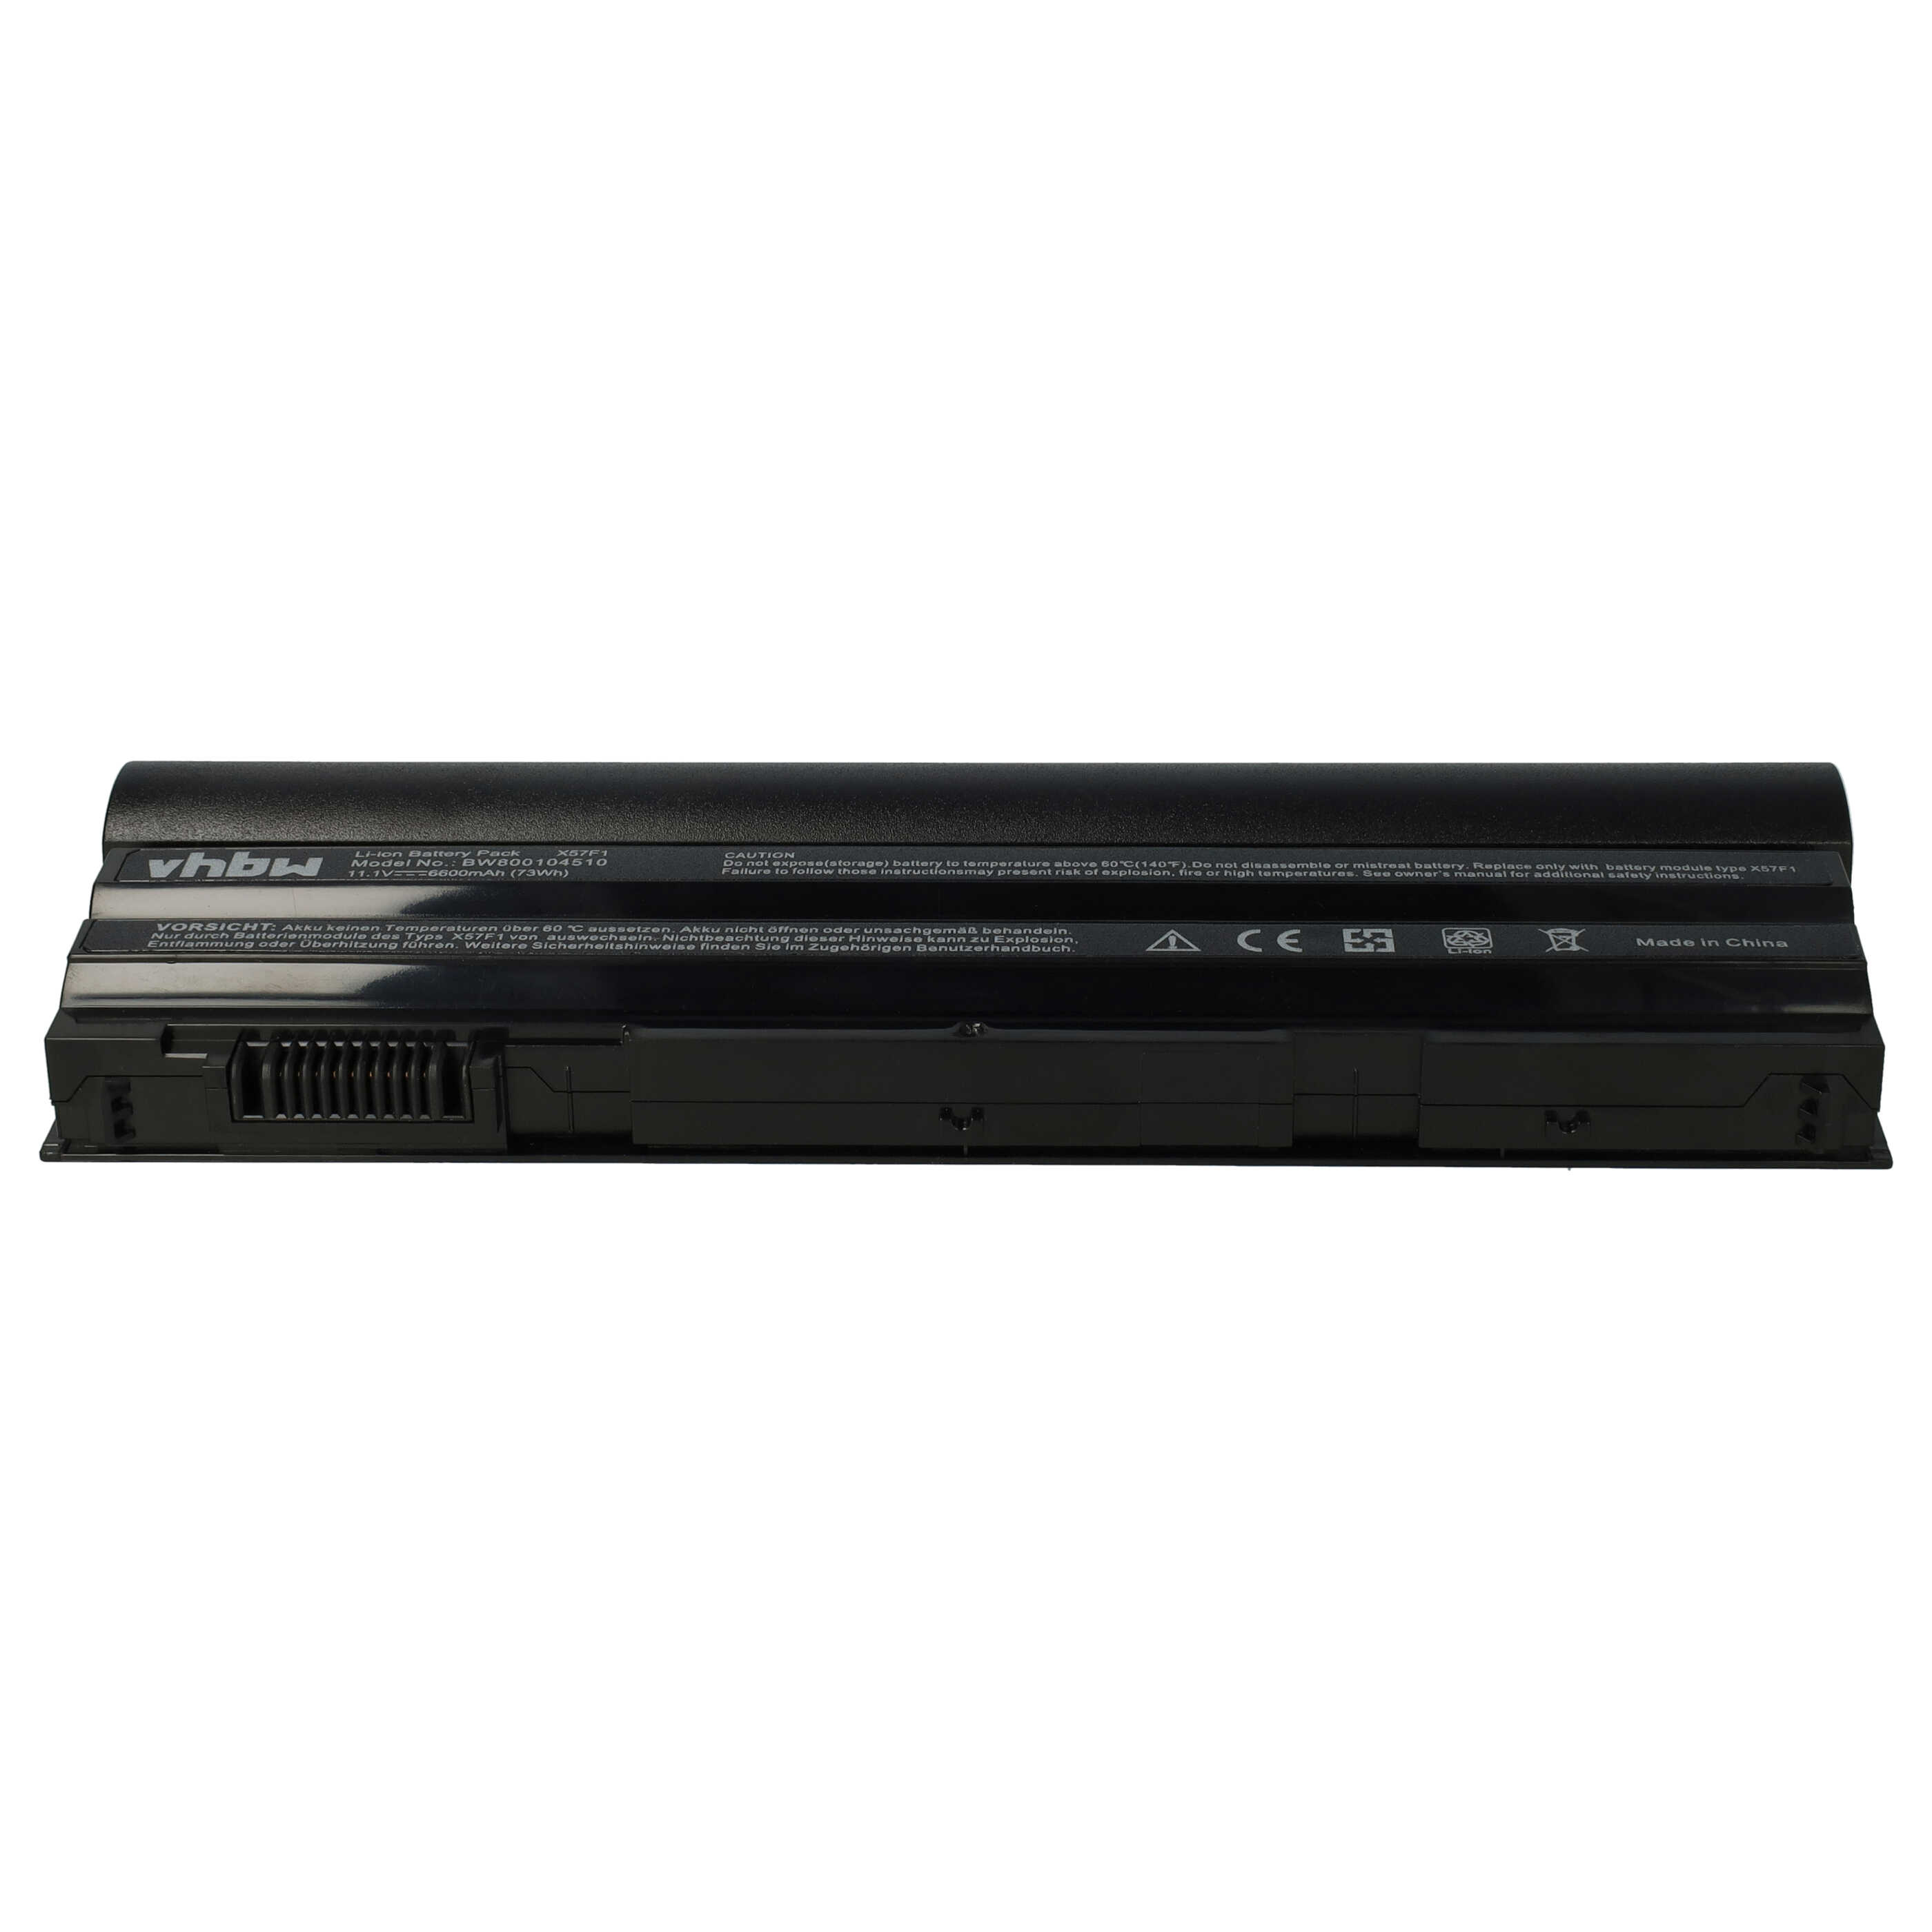 Akumulator do laptopa zamiennik Dell 2P2MJ, 04NW9, 0DTG0V, 05G67C, 312-1163 - 6600 mAh 11,1 V Li-Ion, czarny